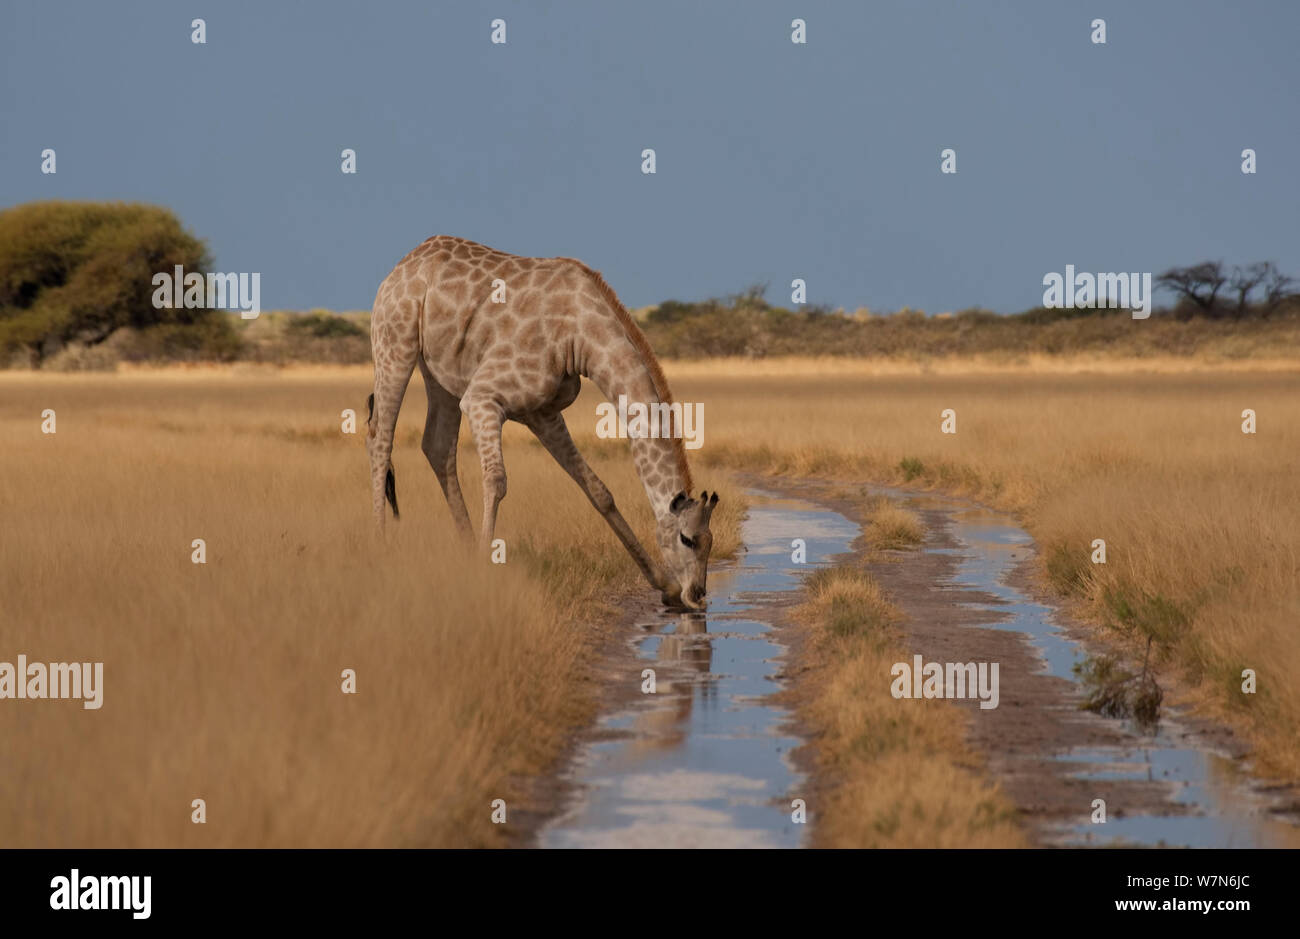 Giraffe (Giraffa camelopardalis) drinking from fresh water puddle in a dirt track after rain storm, Central Kalahari, Botswana Stock Photo